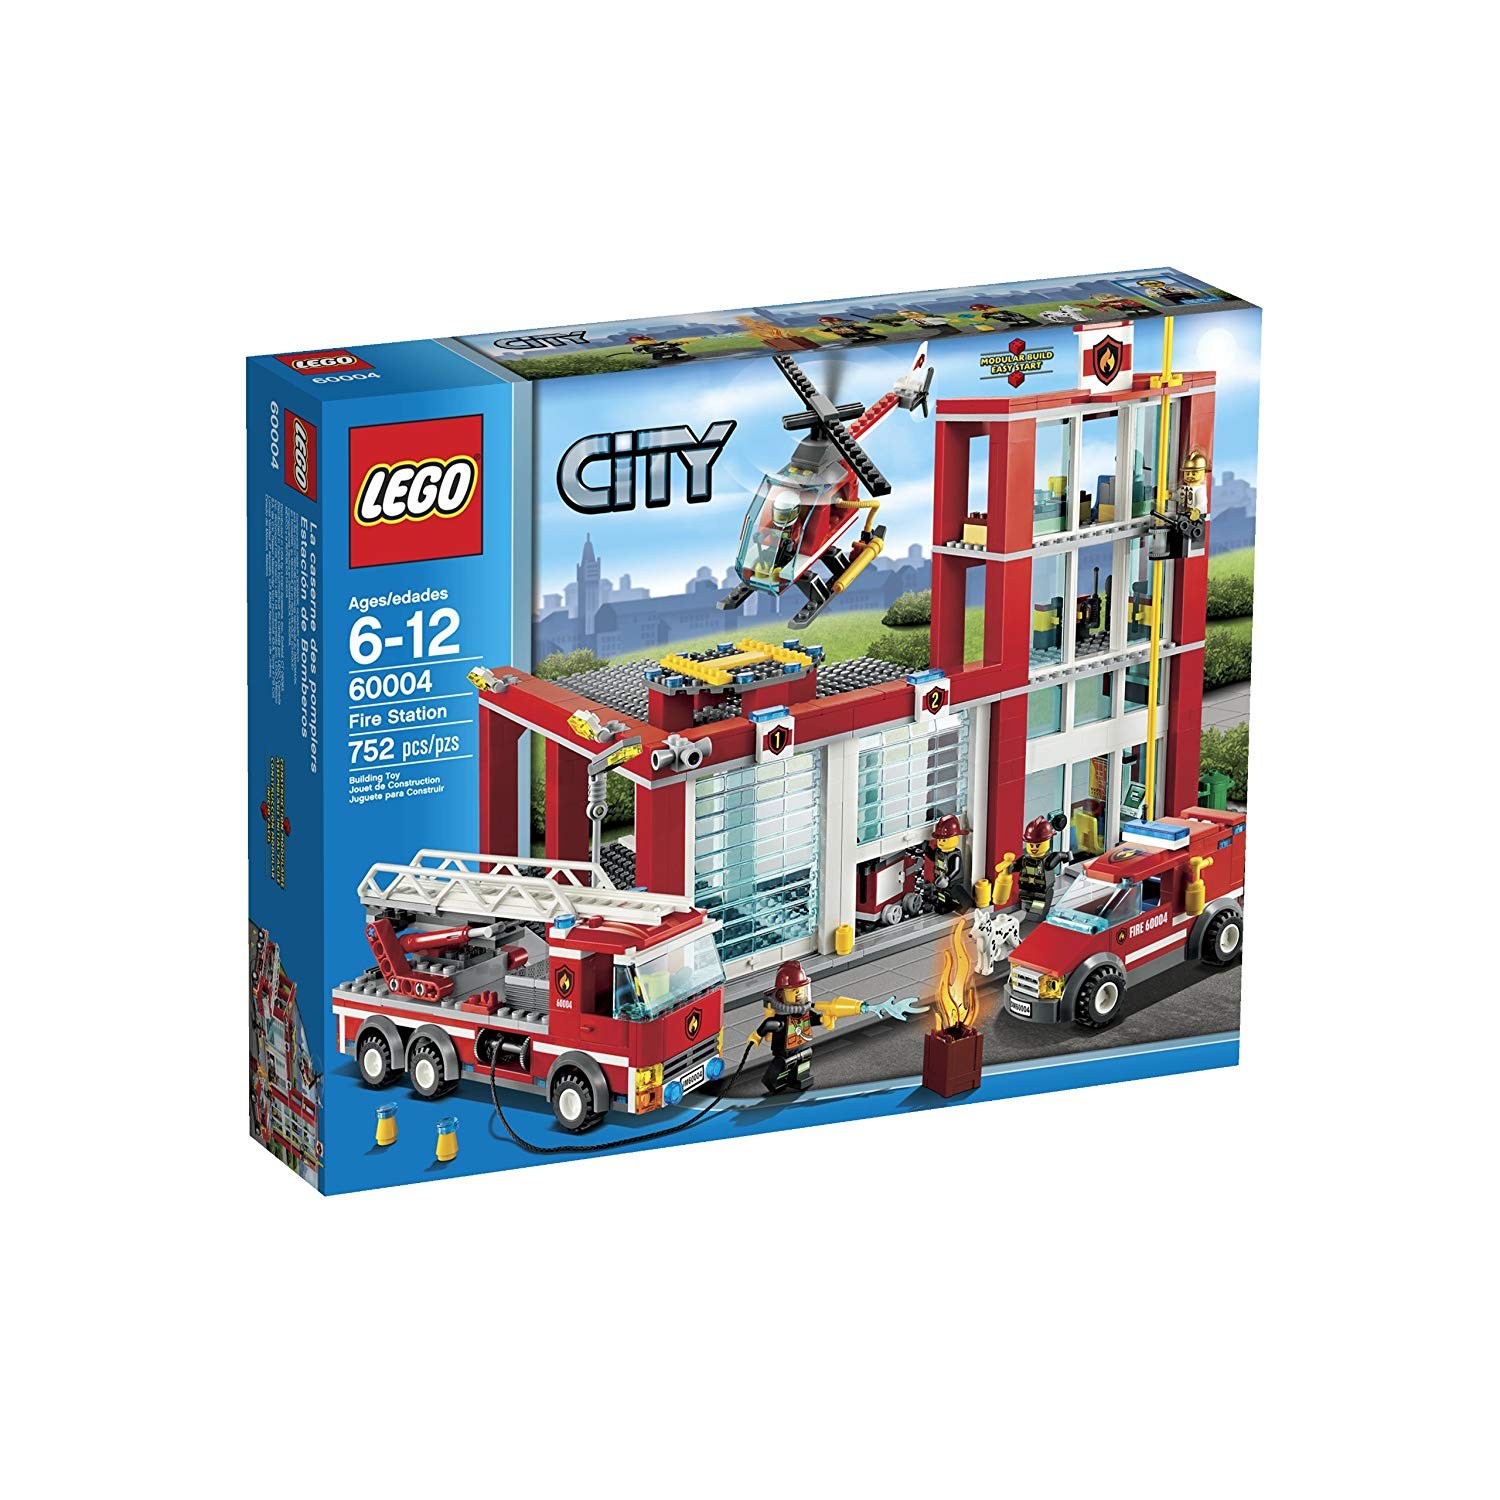 LEGO 레고 시티 New 소방서를 지켜라 (752 Pieces) 